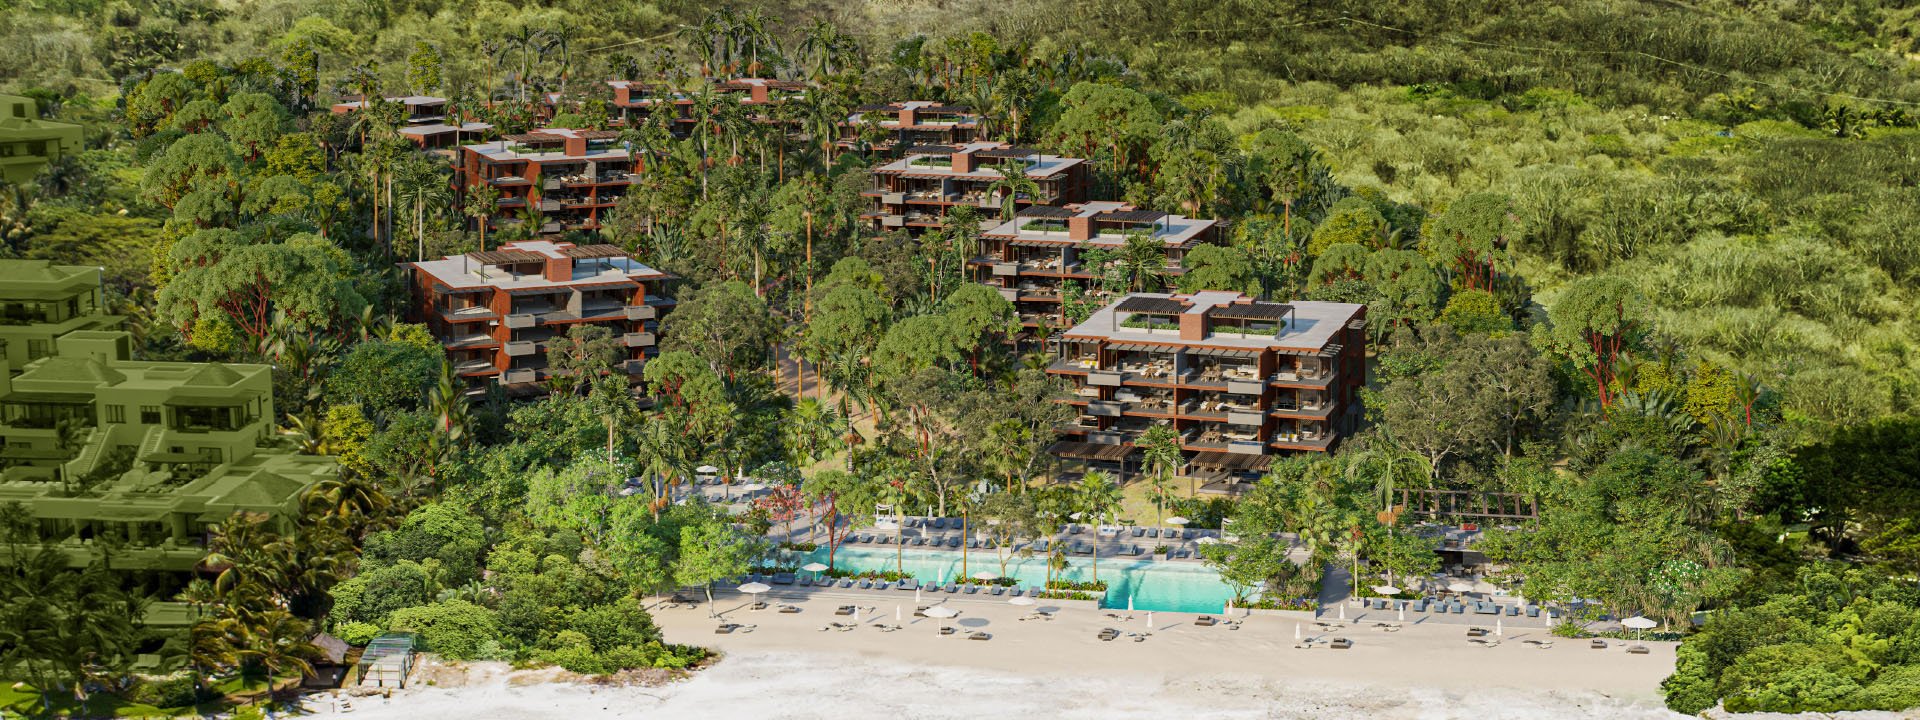 NAYA - Punta de Mita beachfront condos for sale - Riviera Nayarit, Mexico